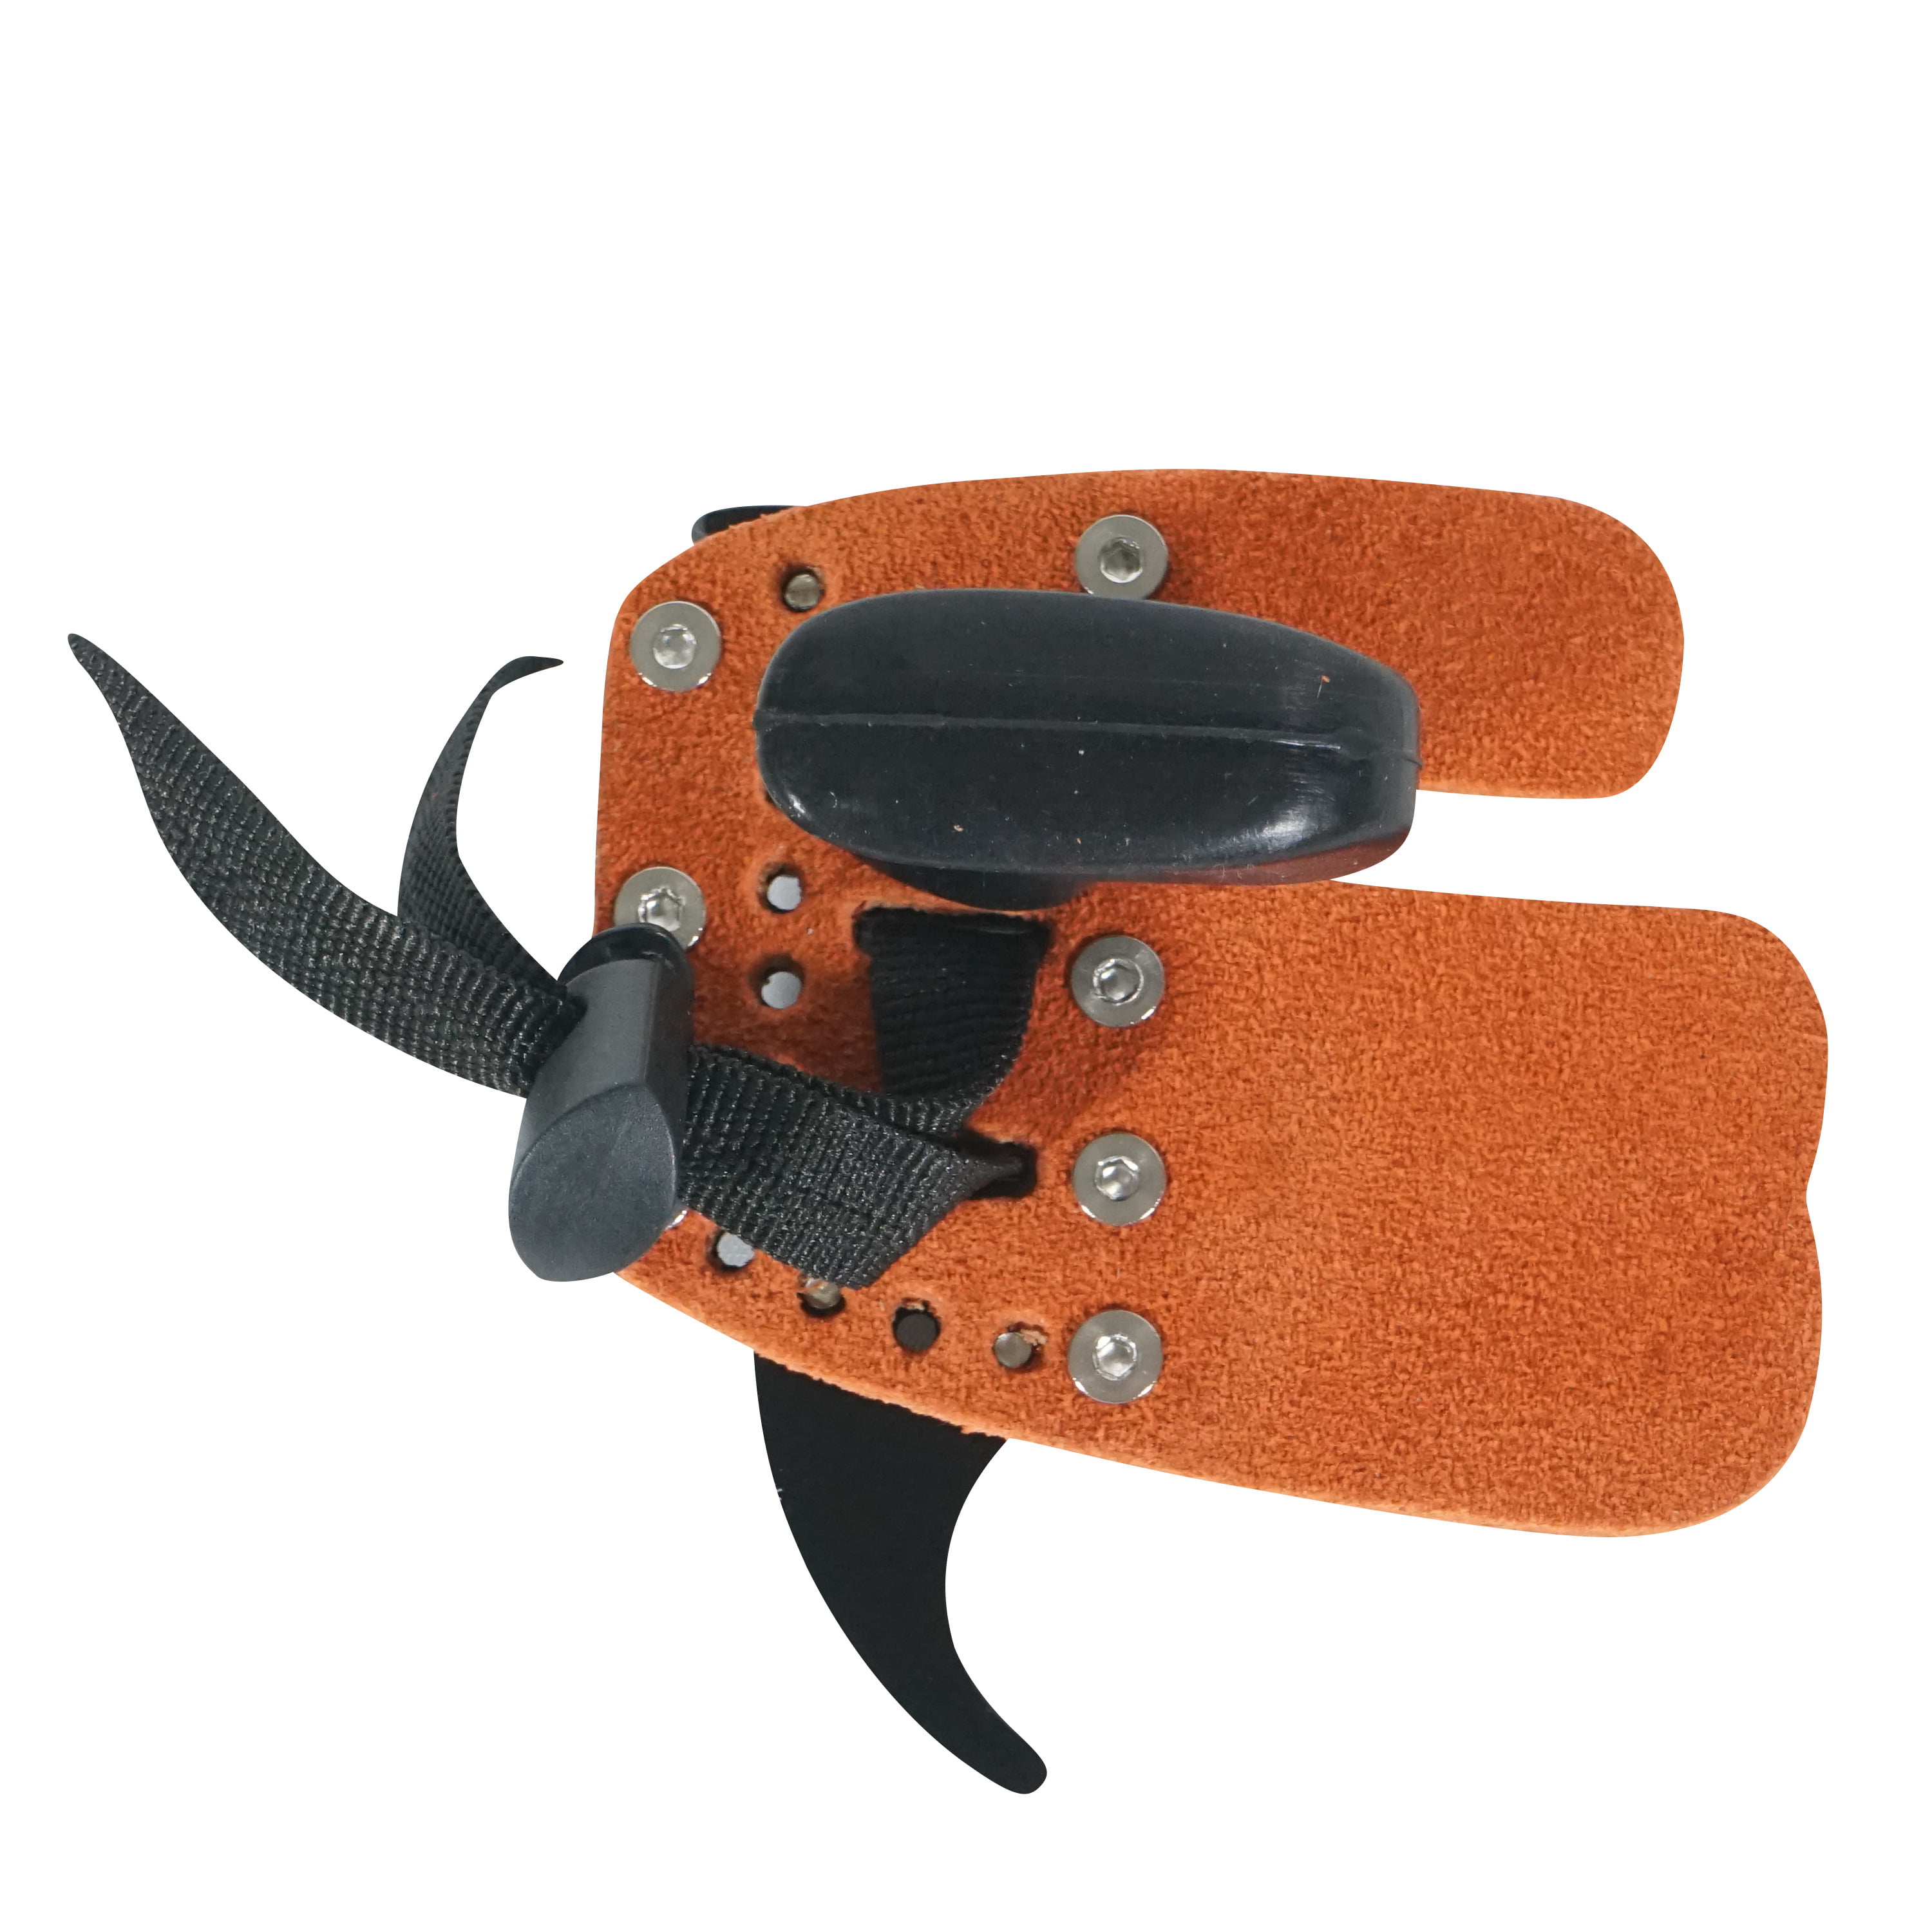 New DECUT RUGBII Archery Finger Tab Guard Leather Adjustable medium , right Black plate 